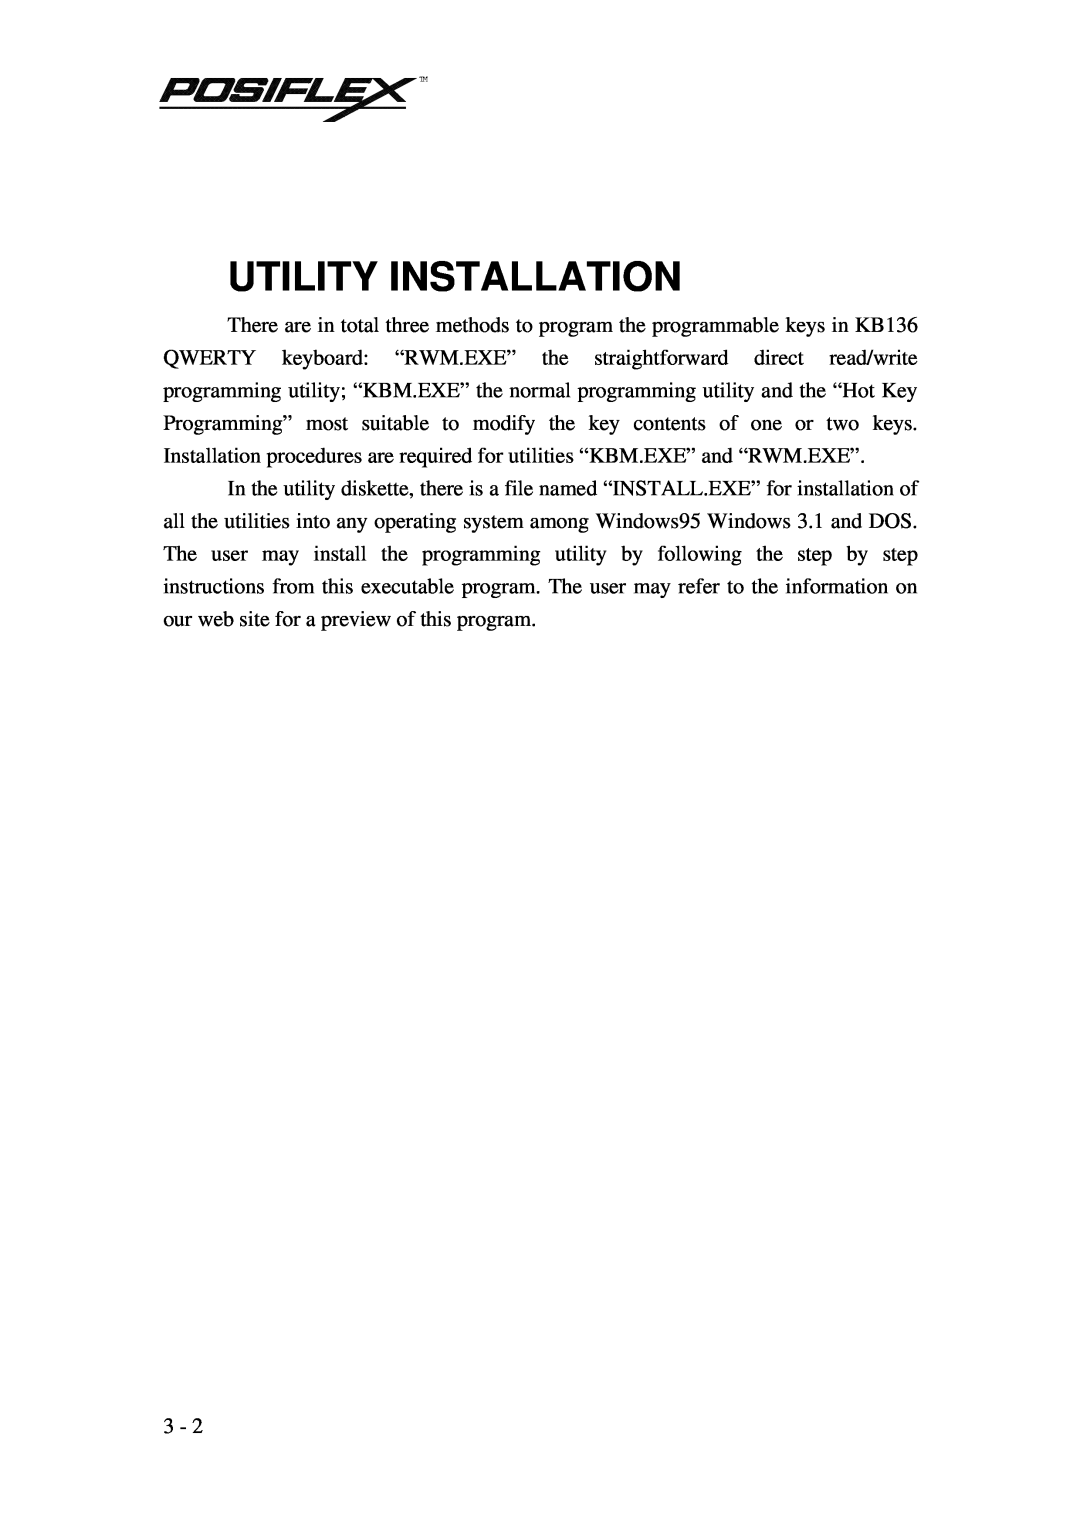 POSIFLEX Business Machines PST KB136 manual Utility Installation 